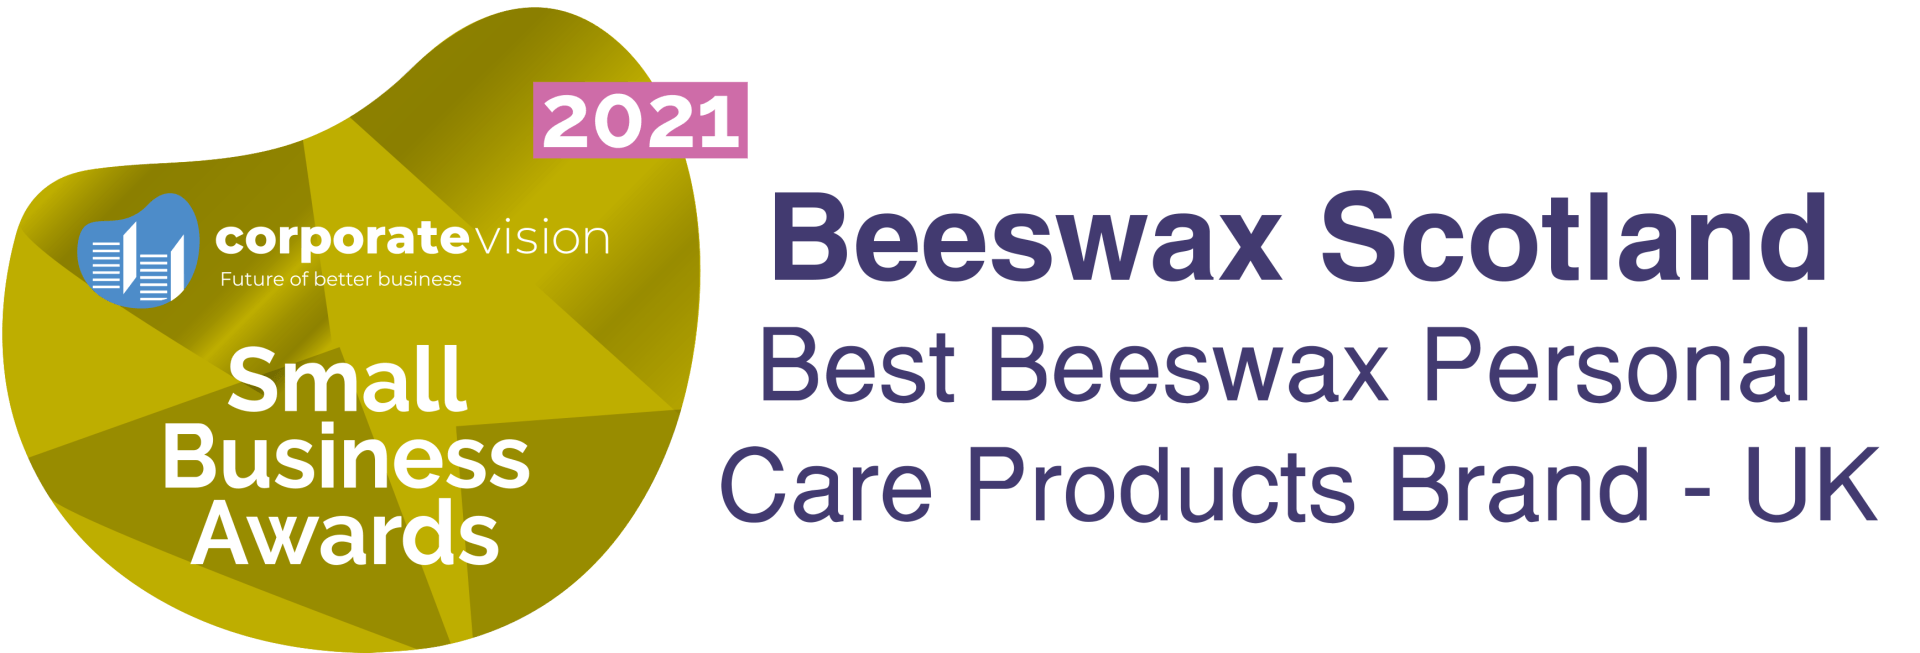 Beeswax Scotland